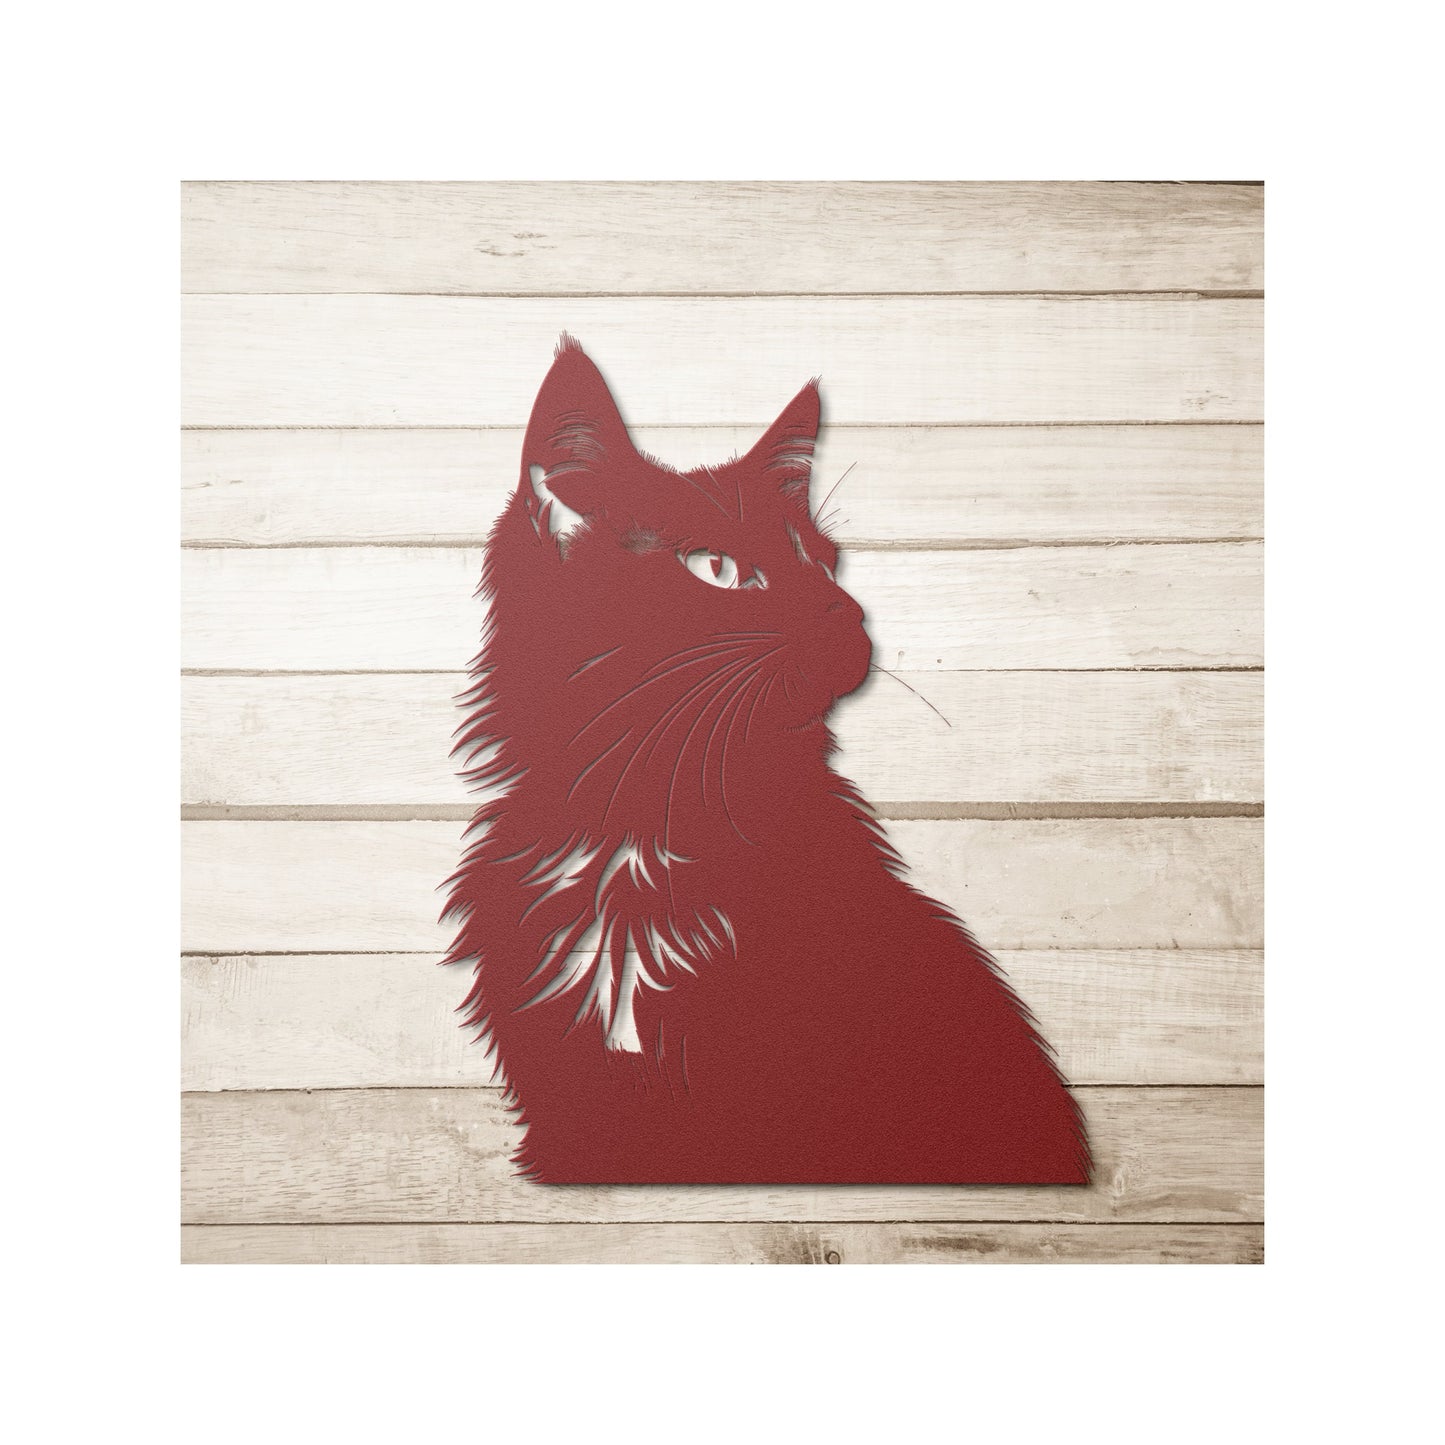 Black Cat Die-Cut Metal Sign, Custom Metal Wall Decor, Gift, Cute Cat Decor, Gift for Friends